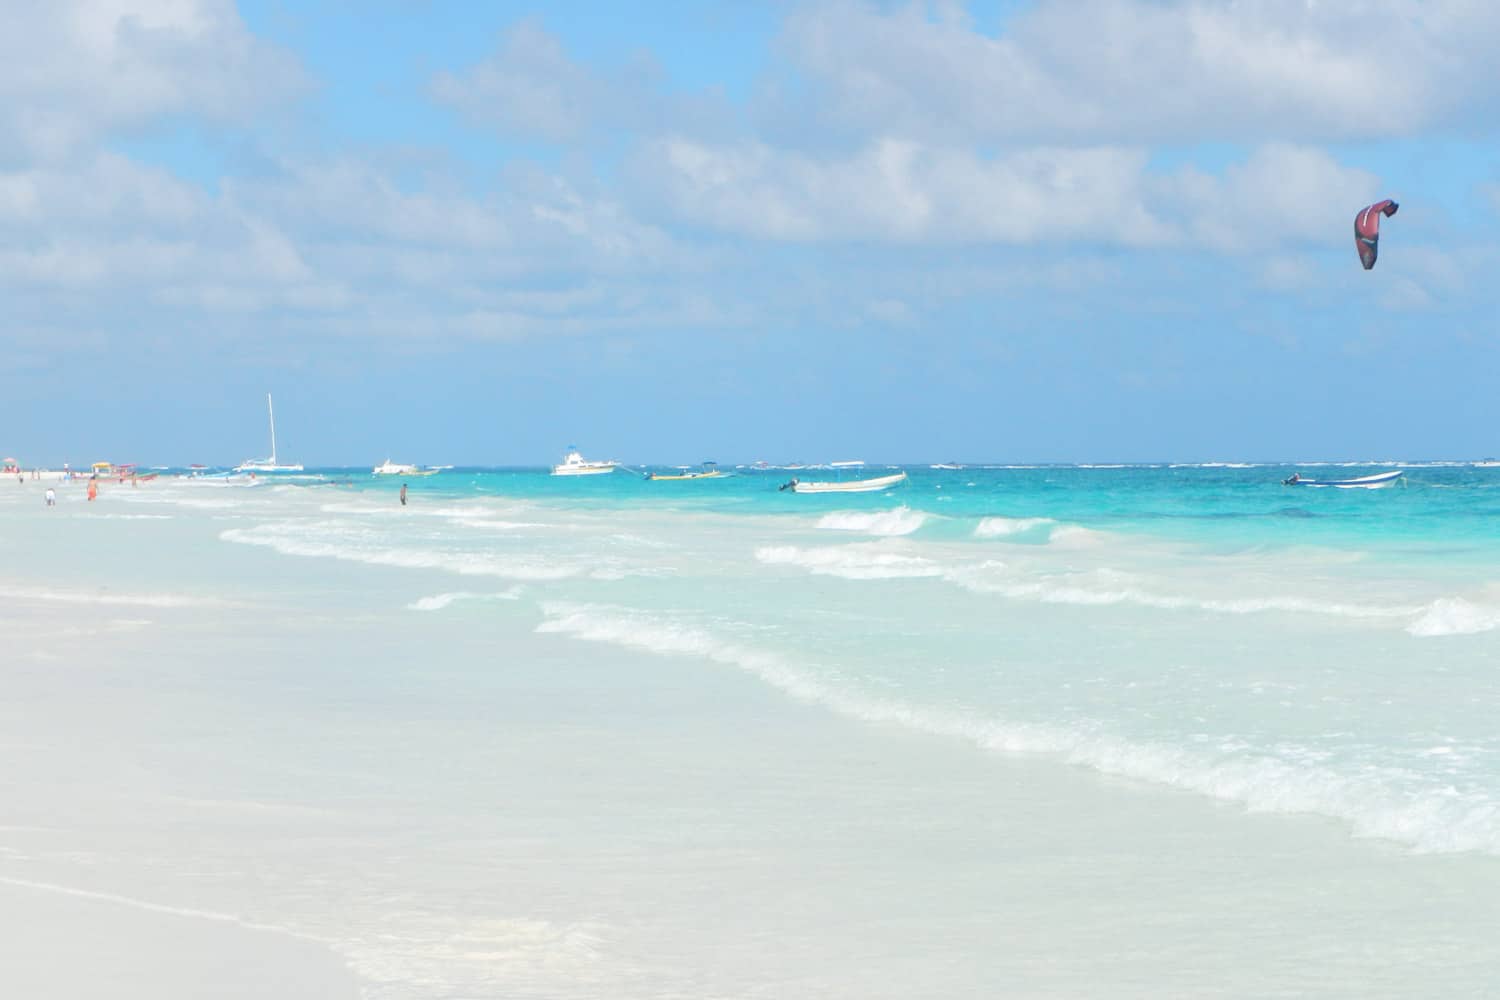 Playa Paraiso beach in the Caribbean